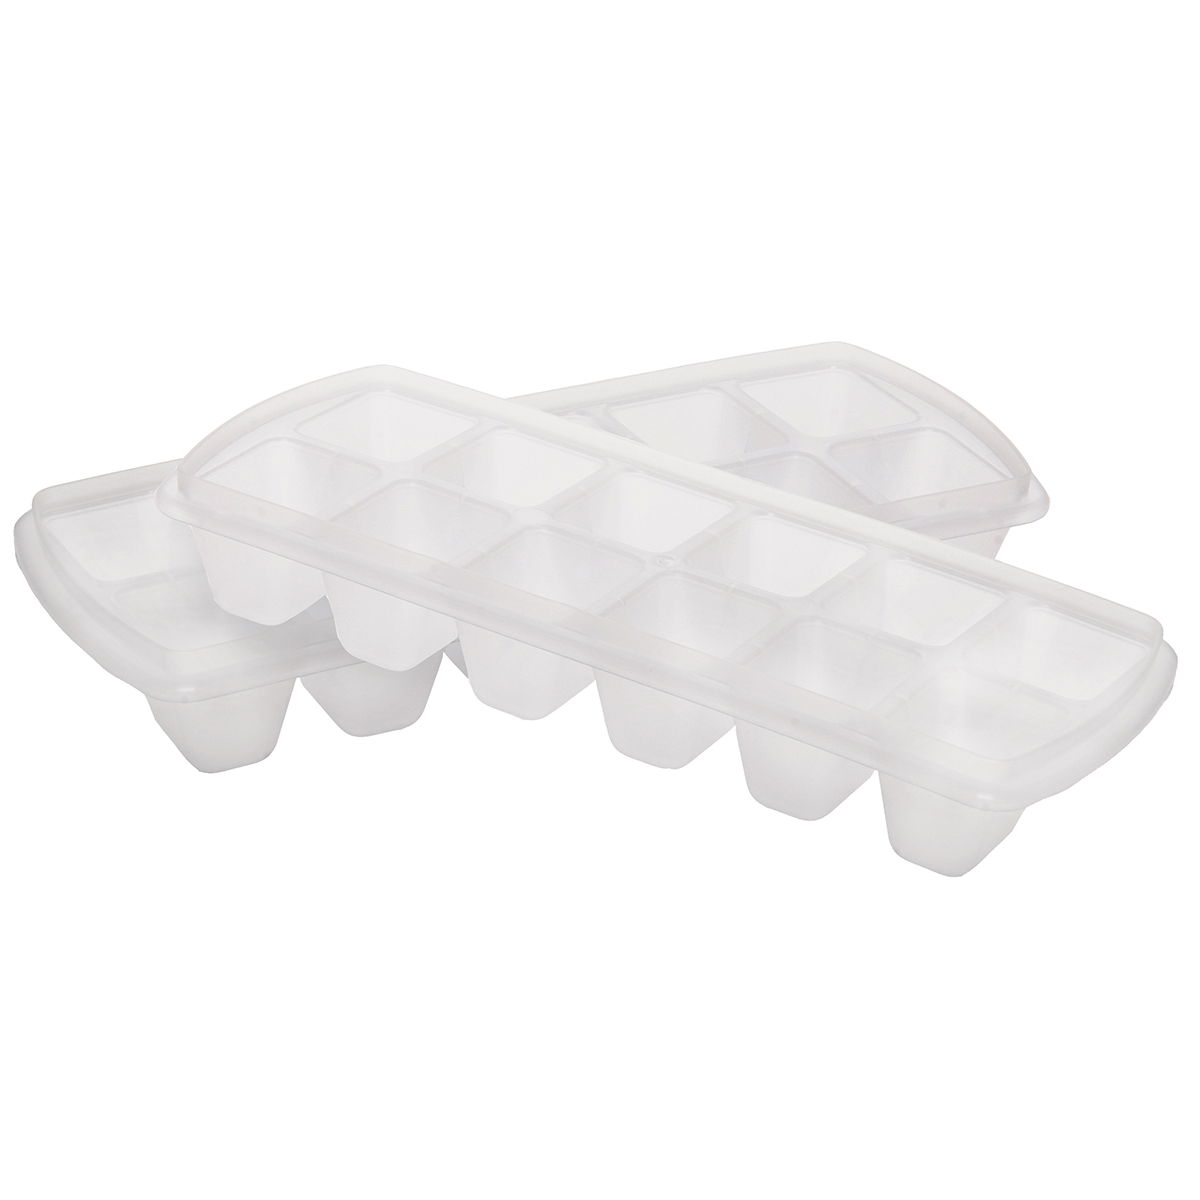 Imperial Plastics Ice Cube Trays 2 Pieces 